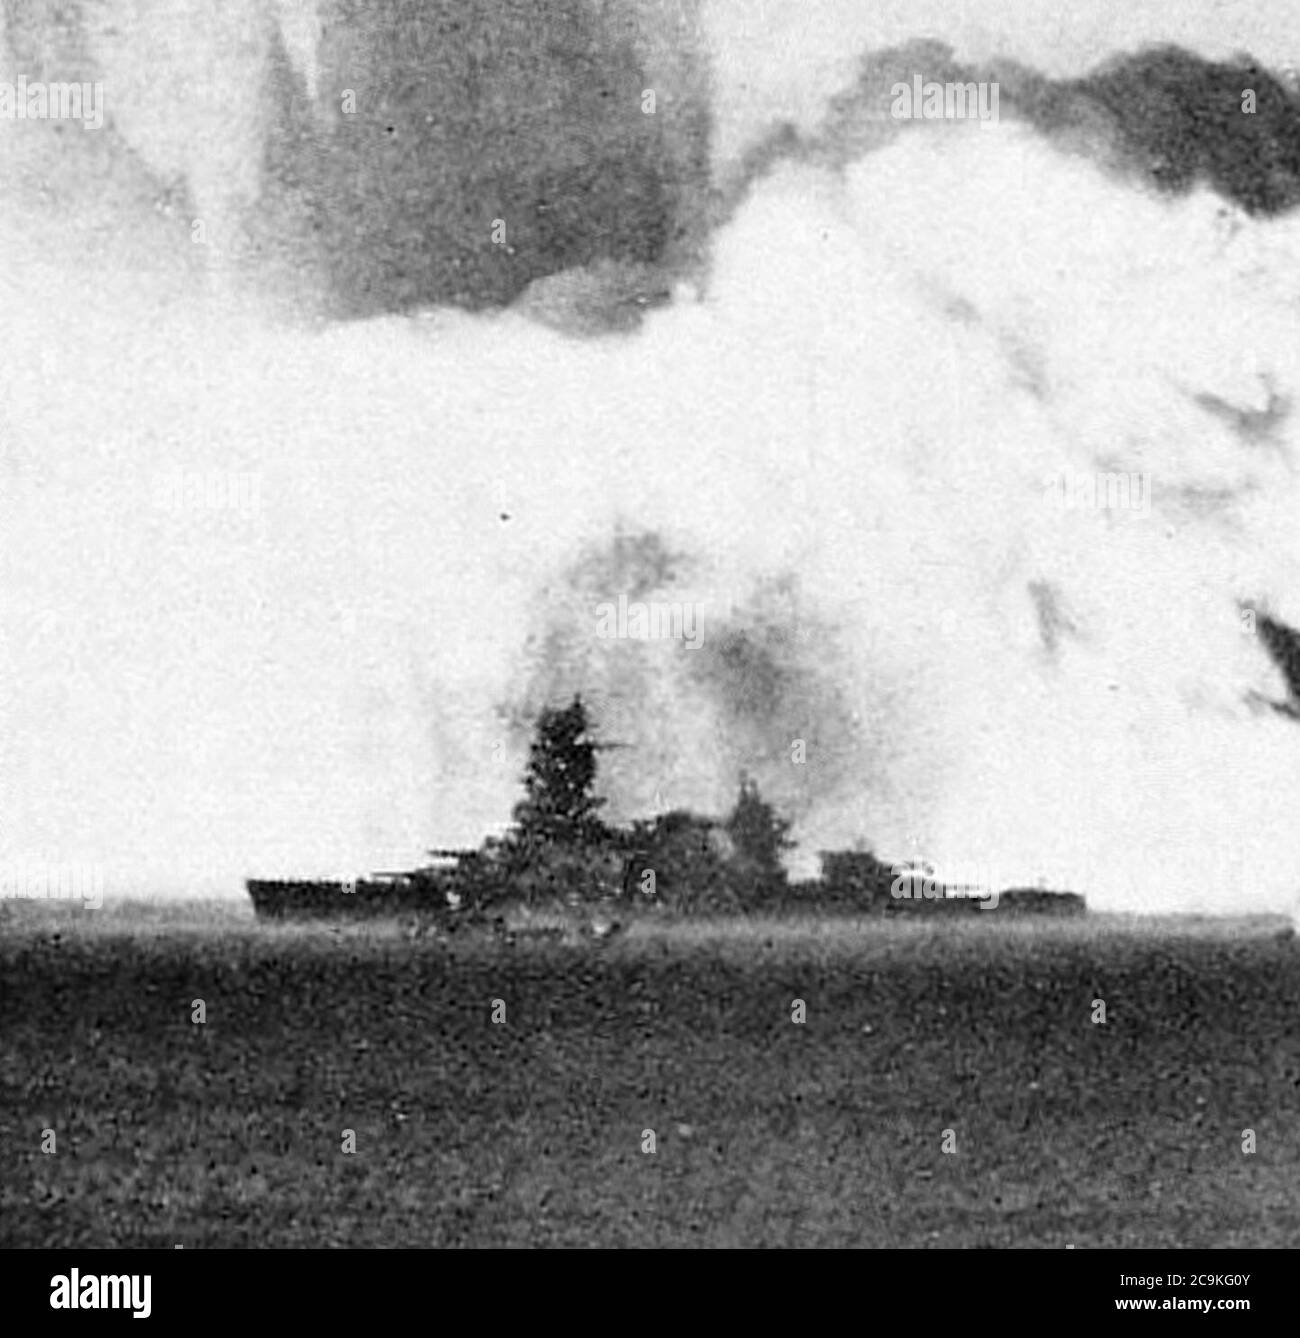 Japanisches Schlachtschiff Nagato bei Baker Schuss der Operation Crossroads Bikini Atoll Juli 25 1946 kurz nach der Detonation- Crossroads Baker Base Surge (abgeschnitten). Stockfoto